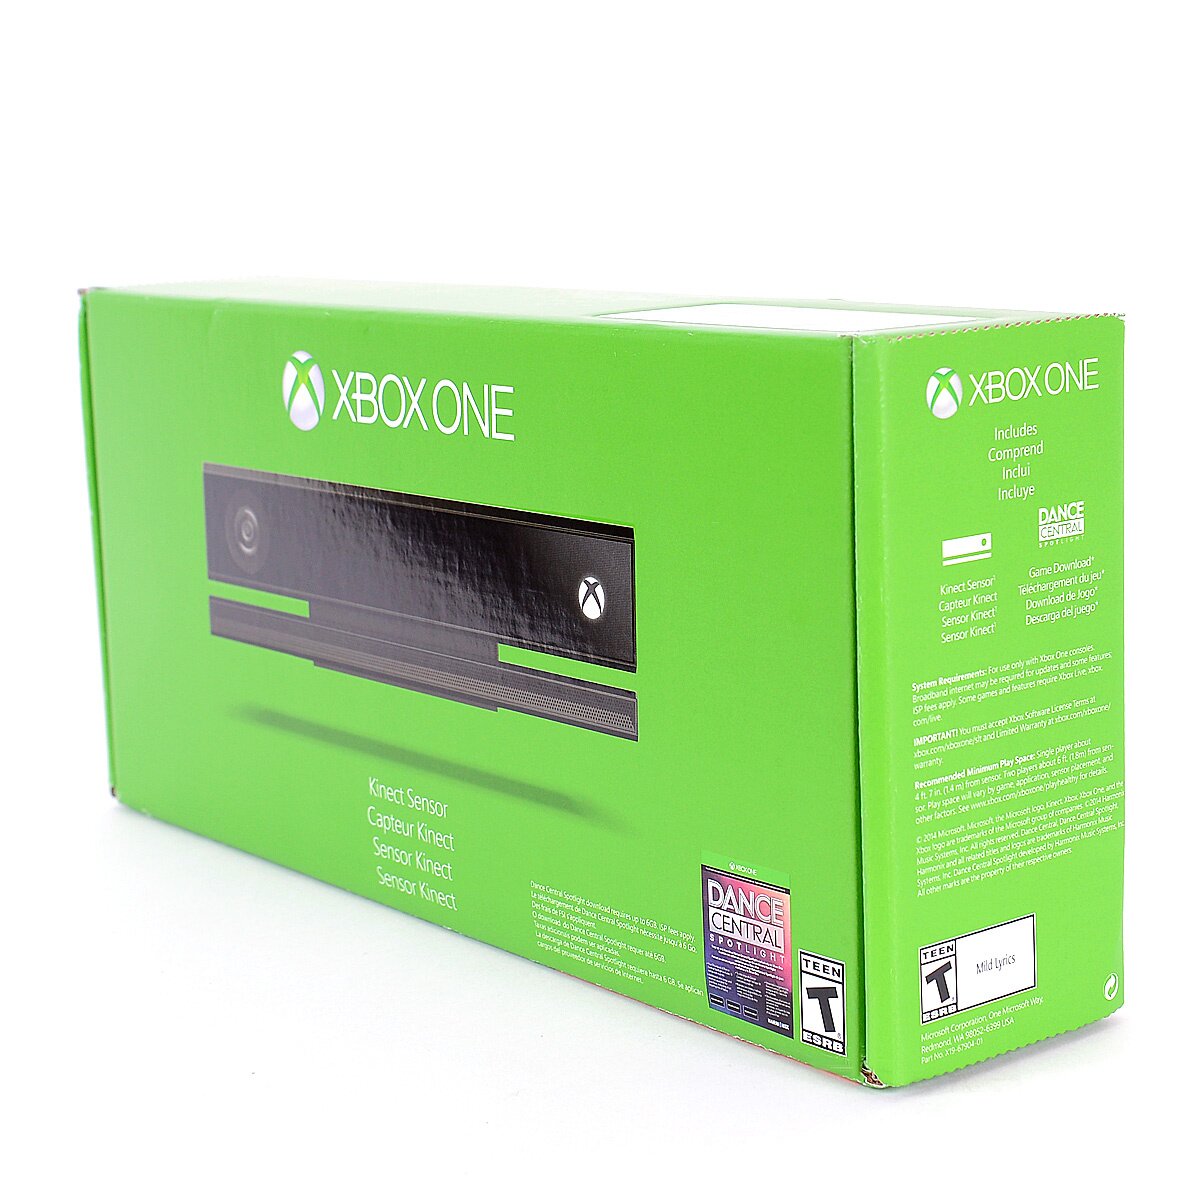 Jogos Kinect Para Xbox 360 Download